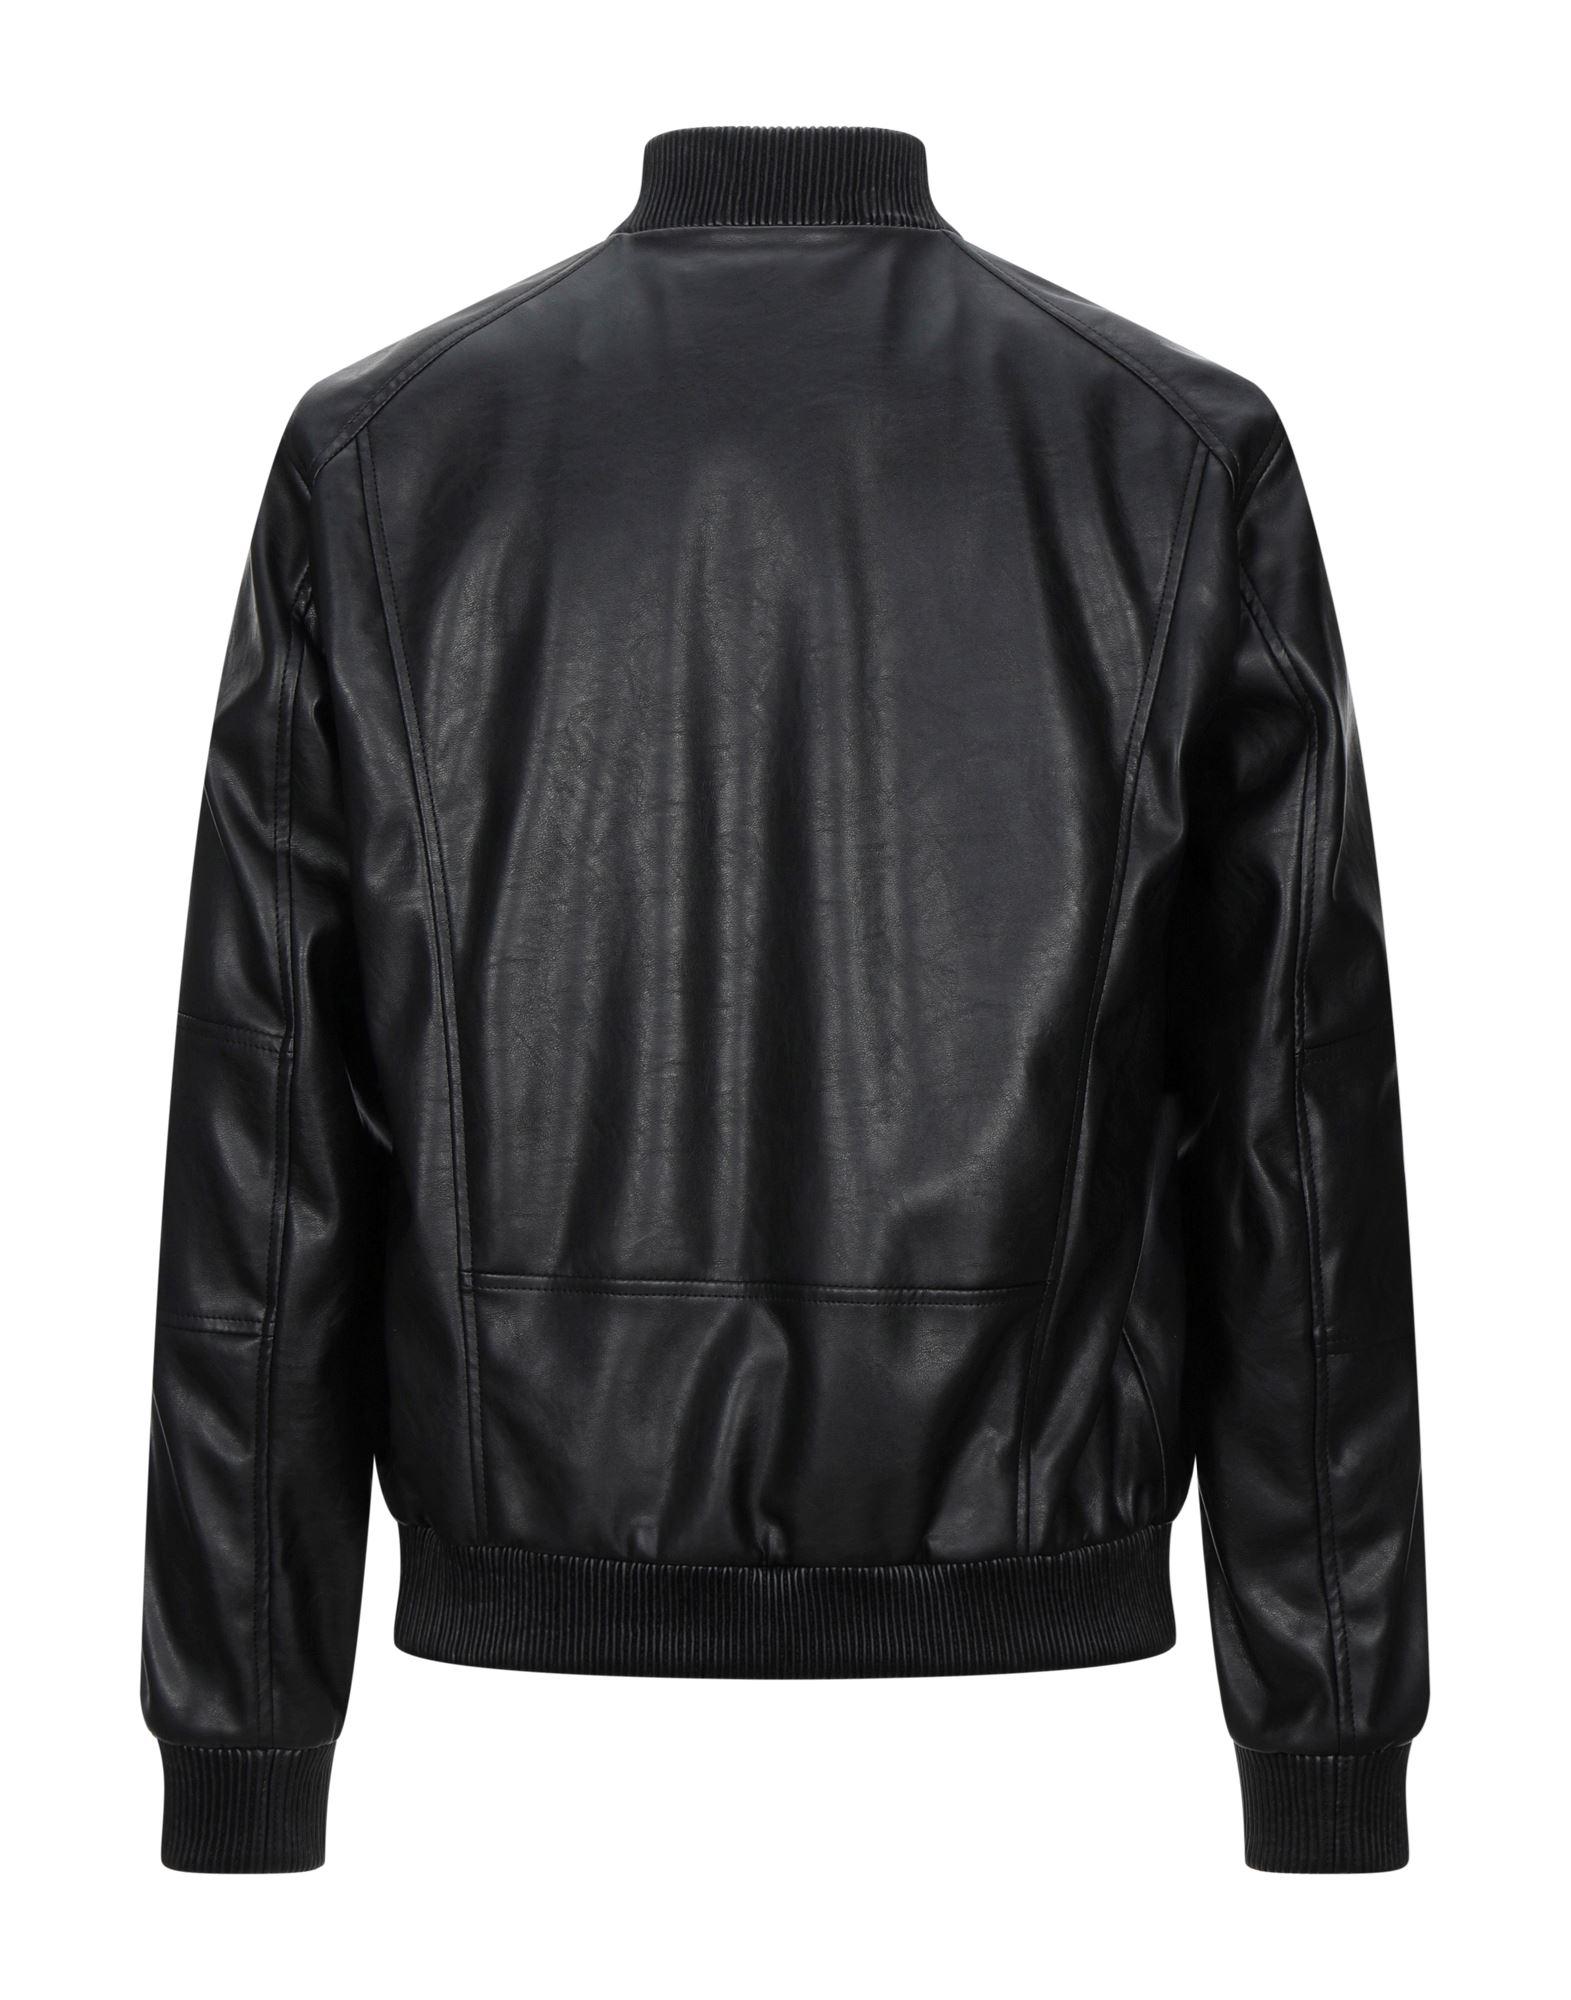 Trussardi Jacket in Black for Men - Lyst